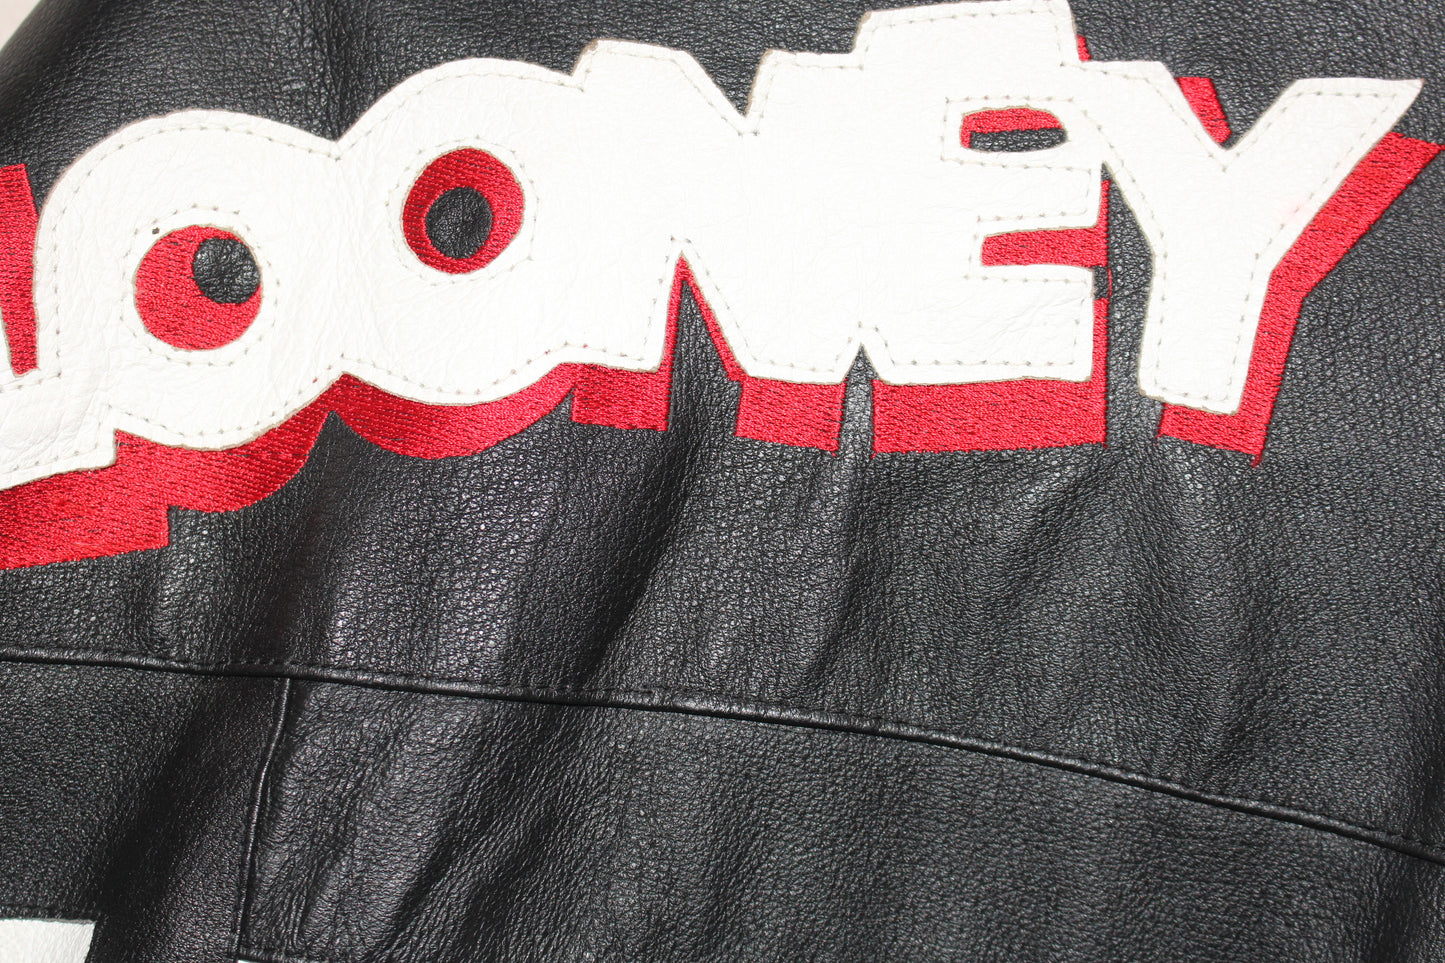 Rare Looney Tunes 1997 Leather Jacket (L)